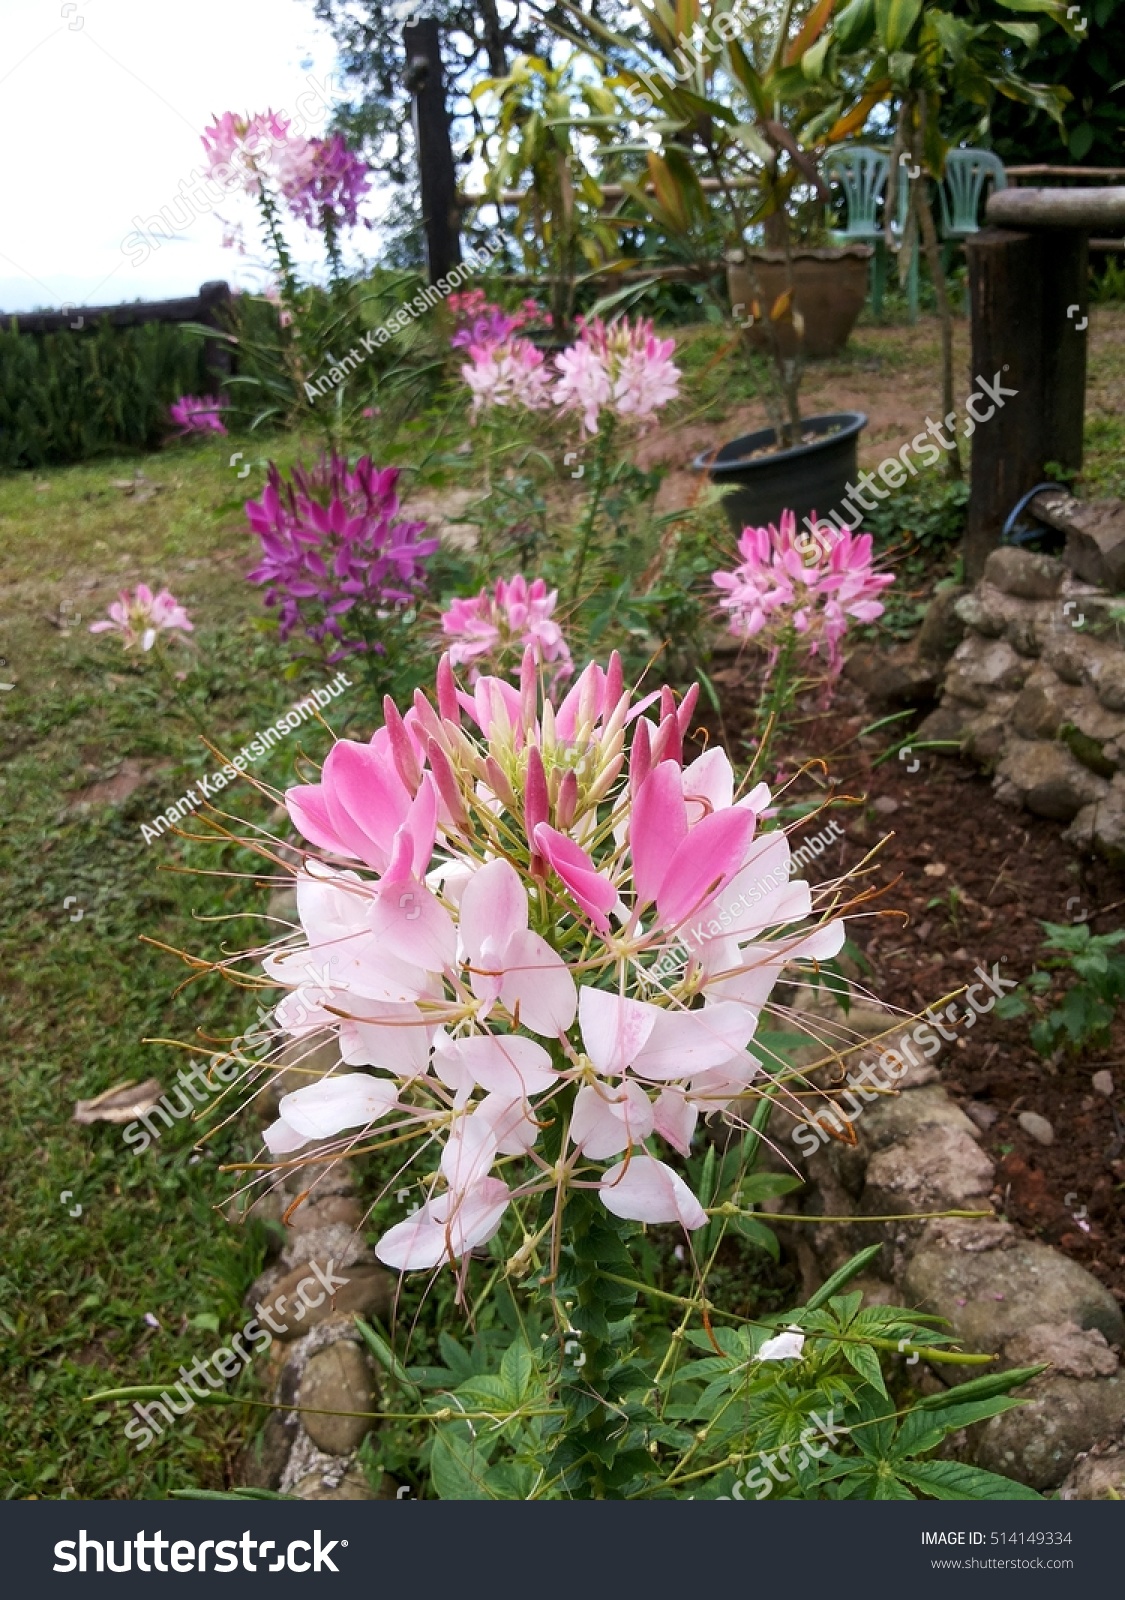 Capparidaceaeoddly Shaped Pink Flowers Arranged Lotusshapecleome Nature Stock Image 514149334